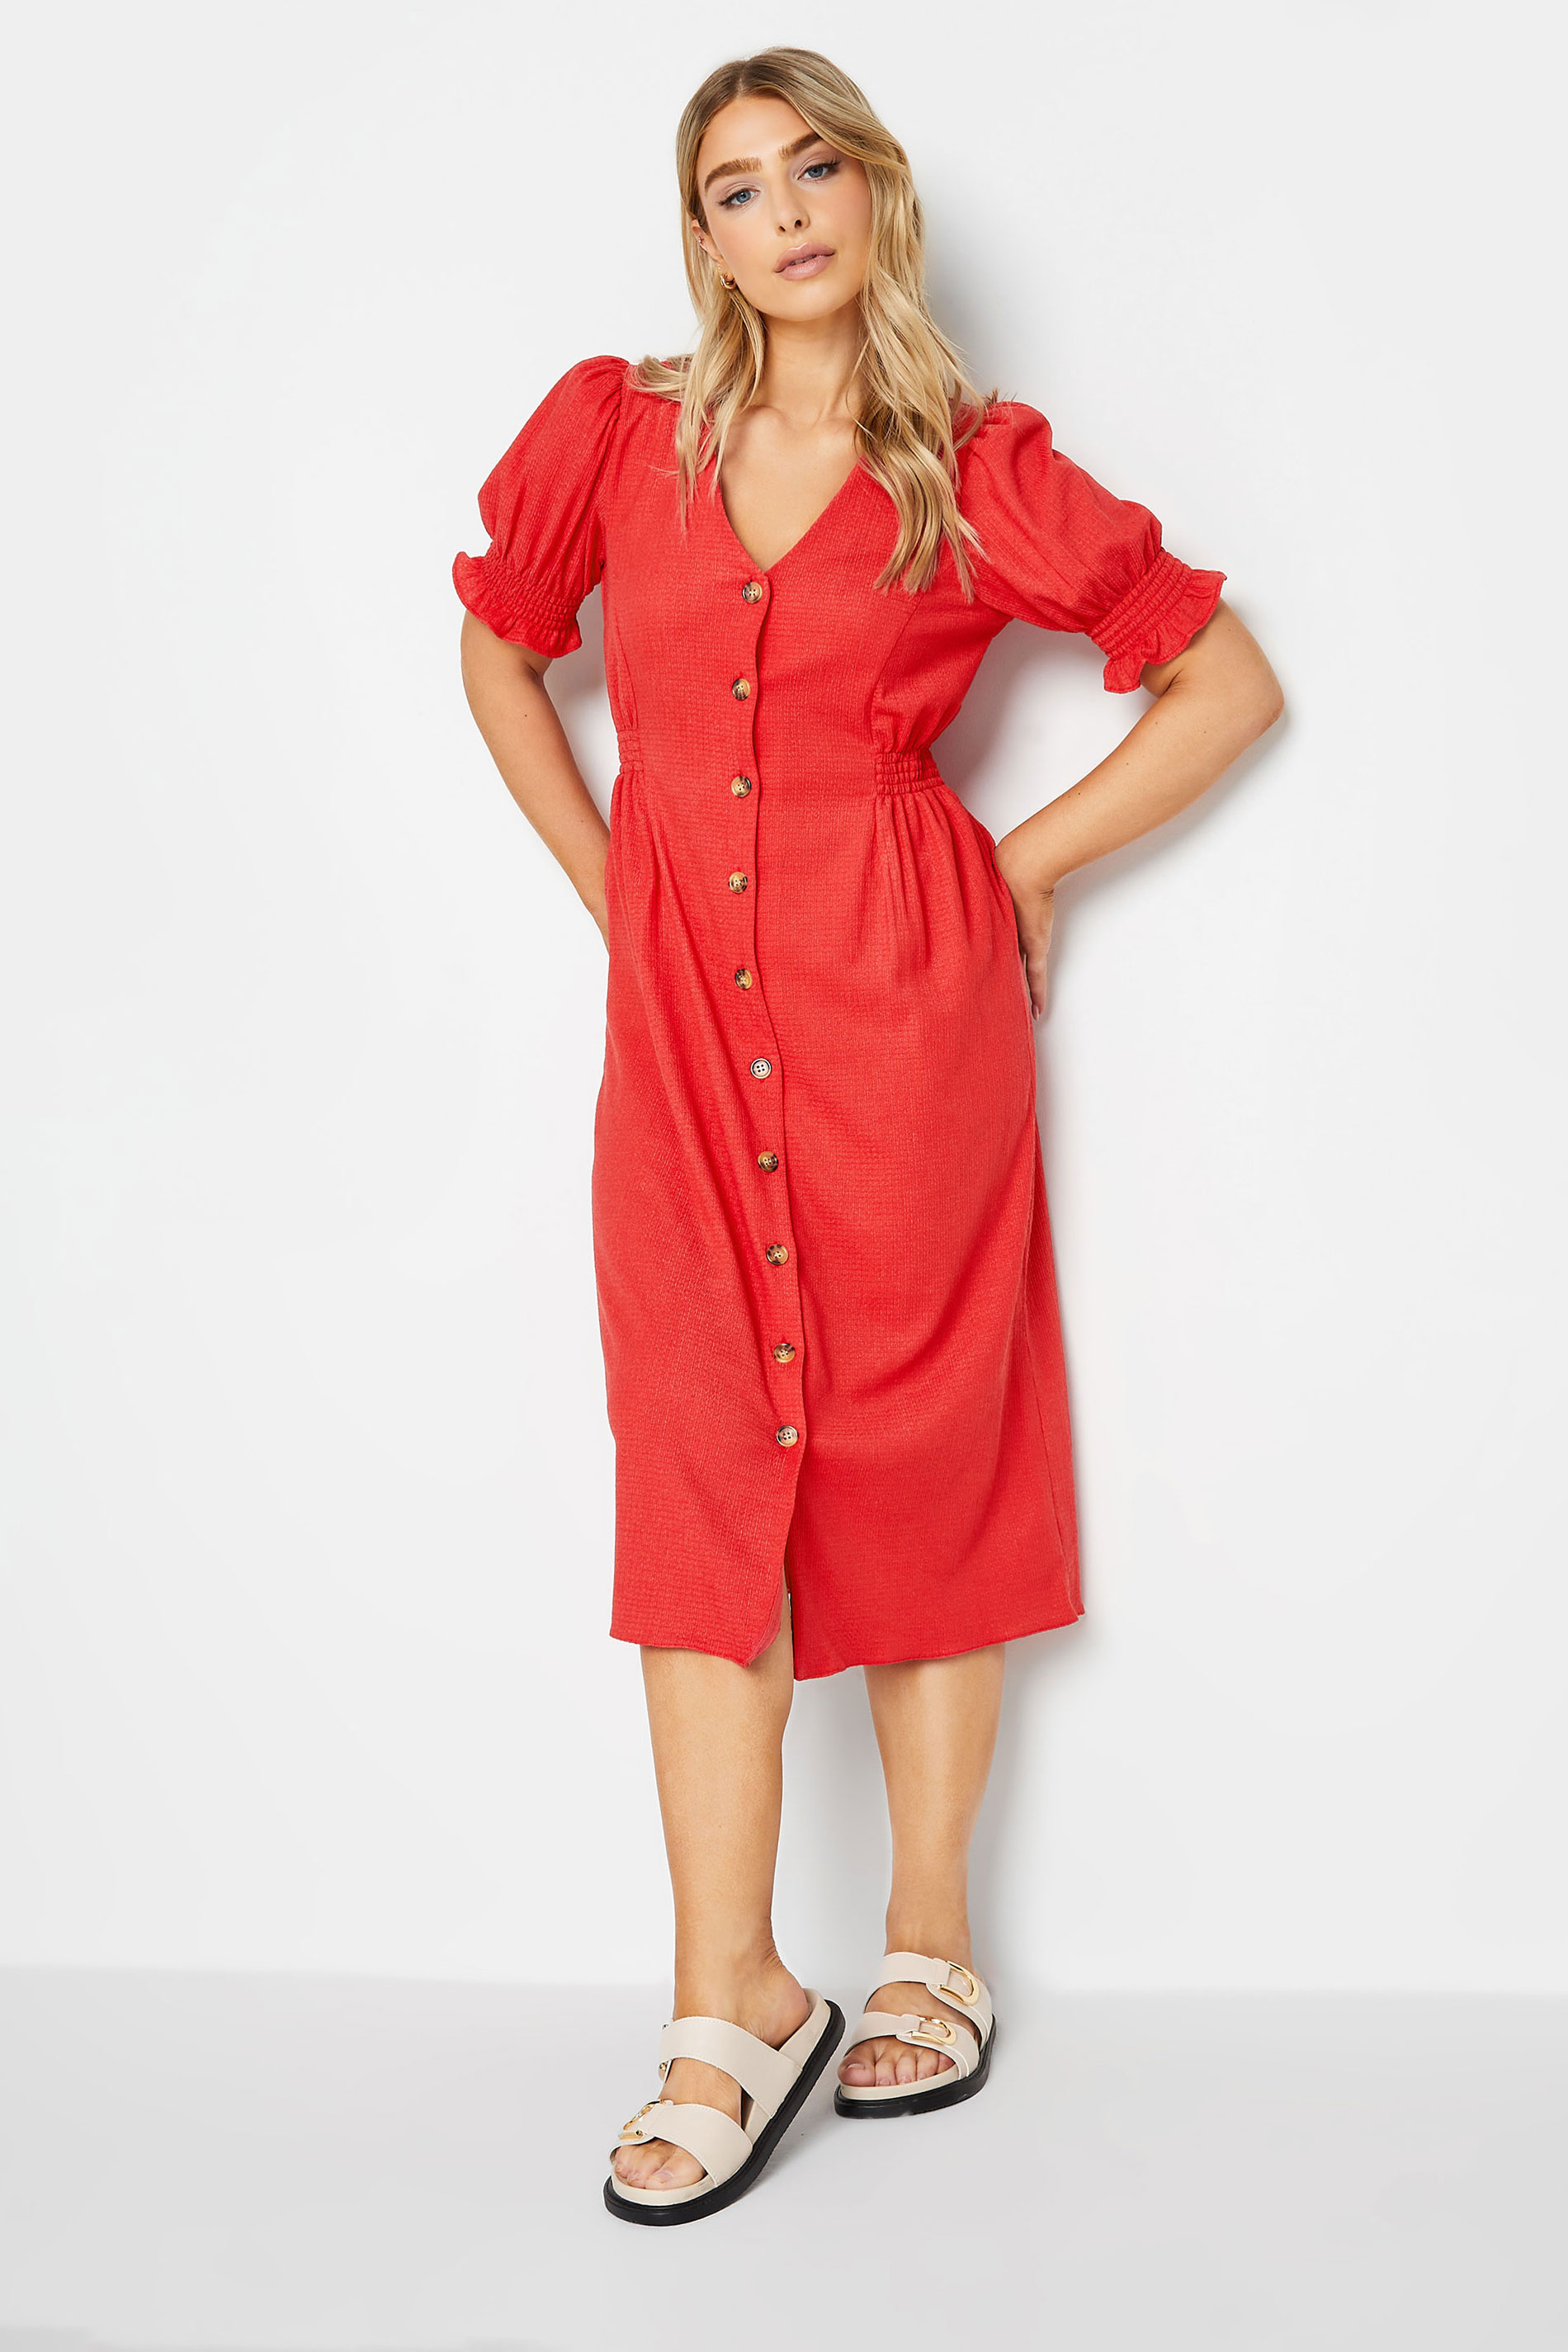 M&Co Red Button Through Midi Dress | M&Co  2